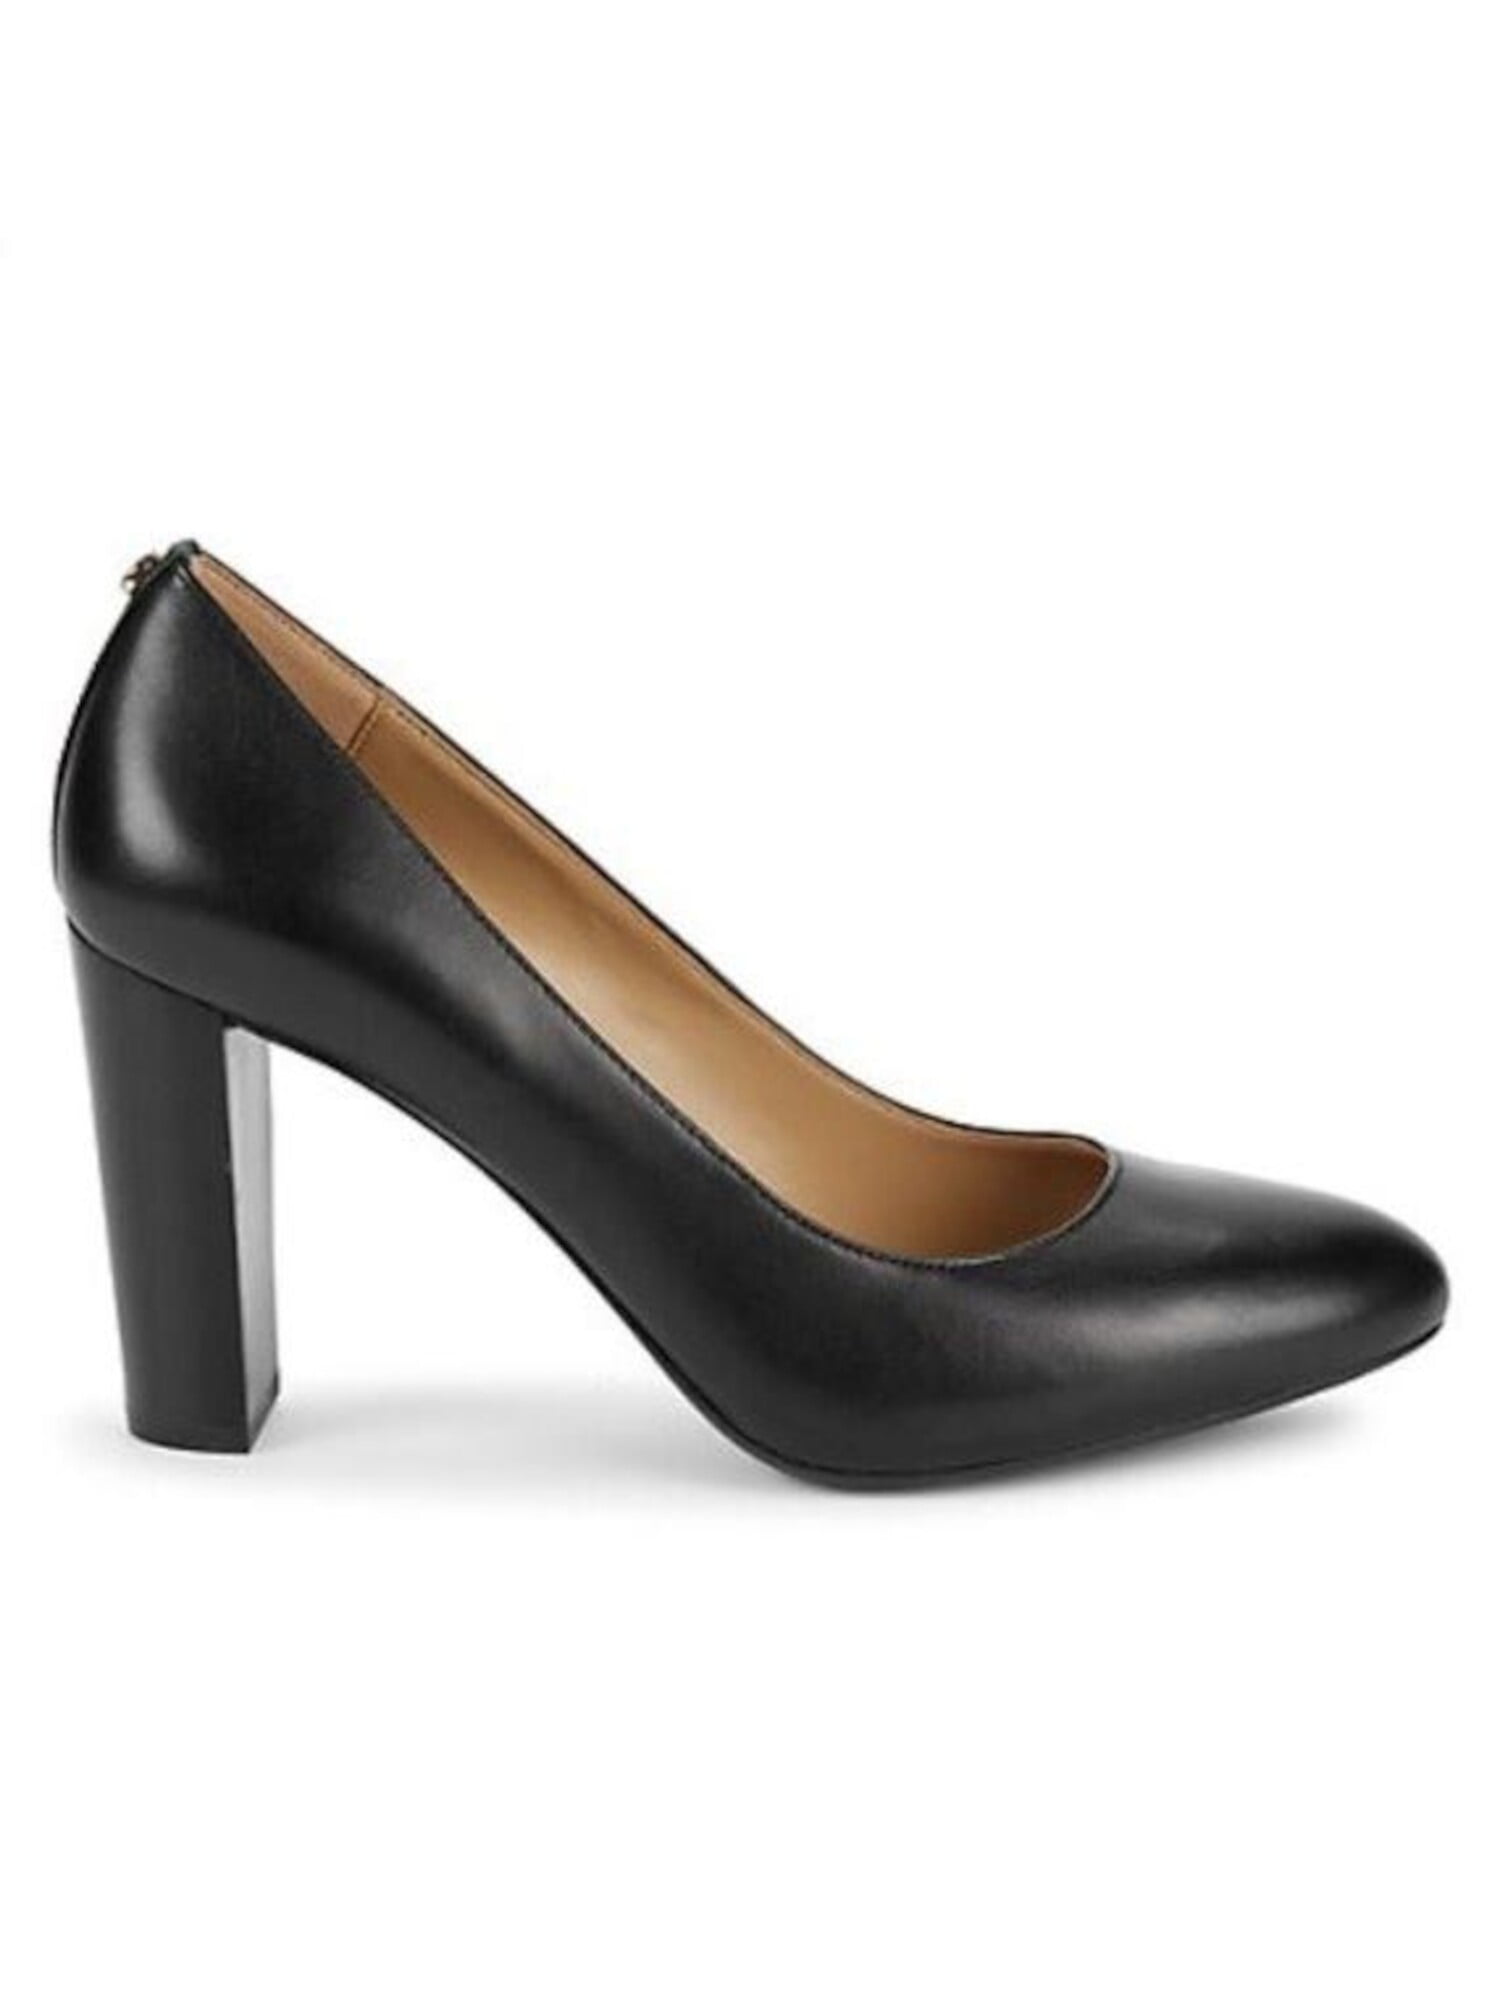 Buy MICHAEL KORS Womens Black Cushioned Susan Round Toe Block Heel Slip On  Leather Dress Pumps 8 M Online at Lowest Price in Ubuy Algeria. 575628673